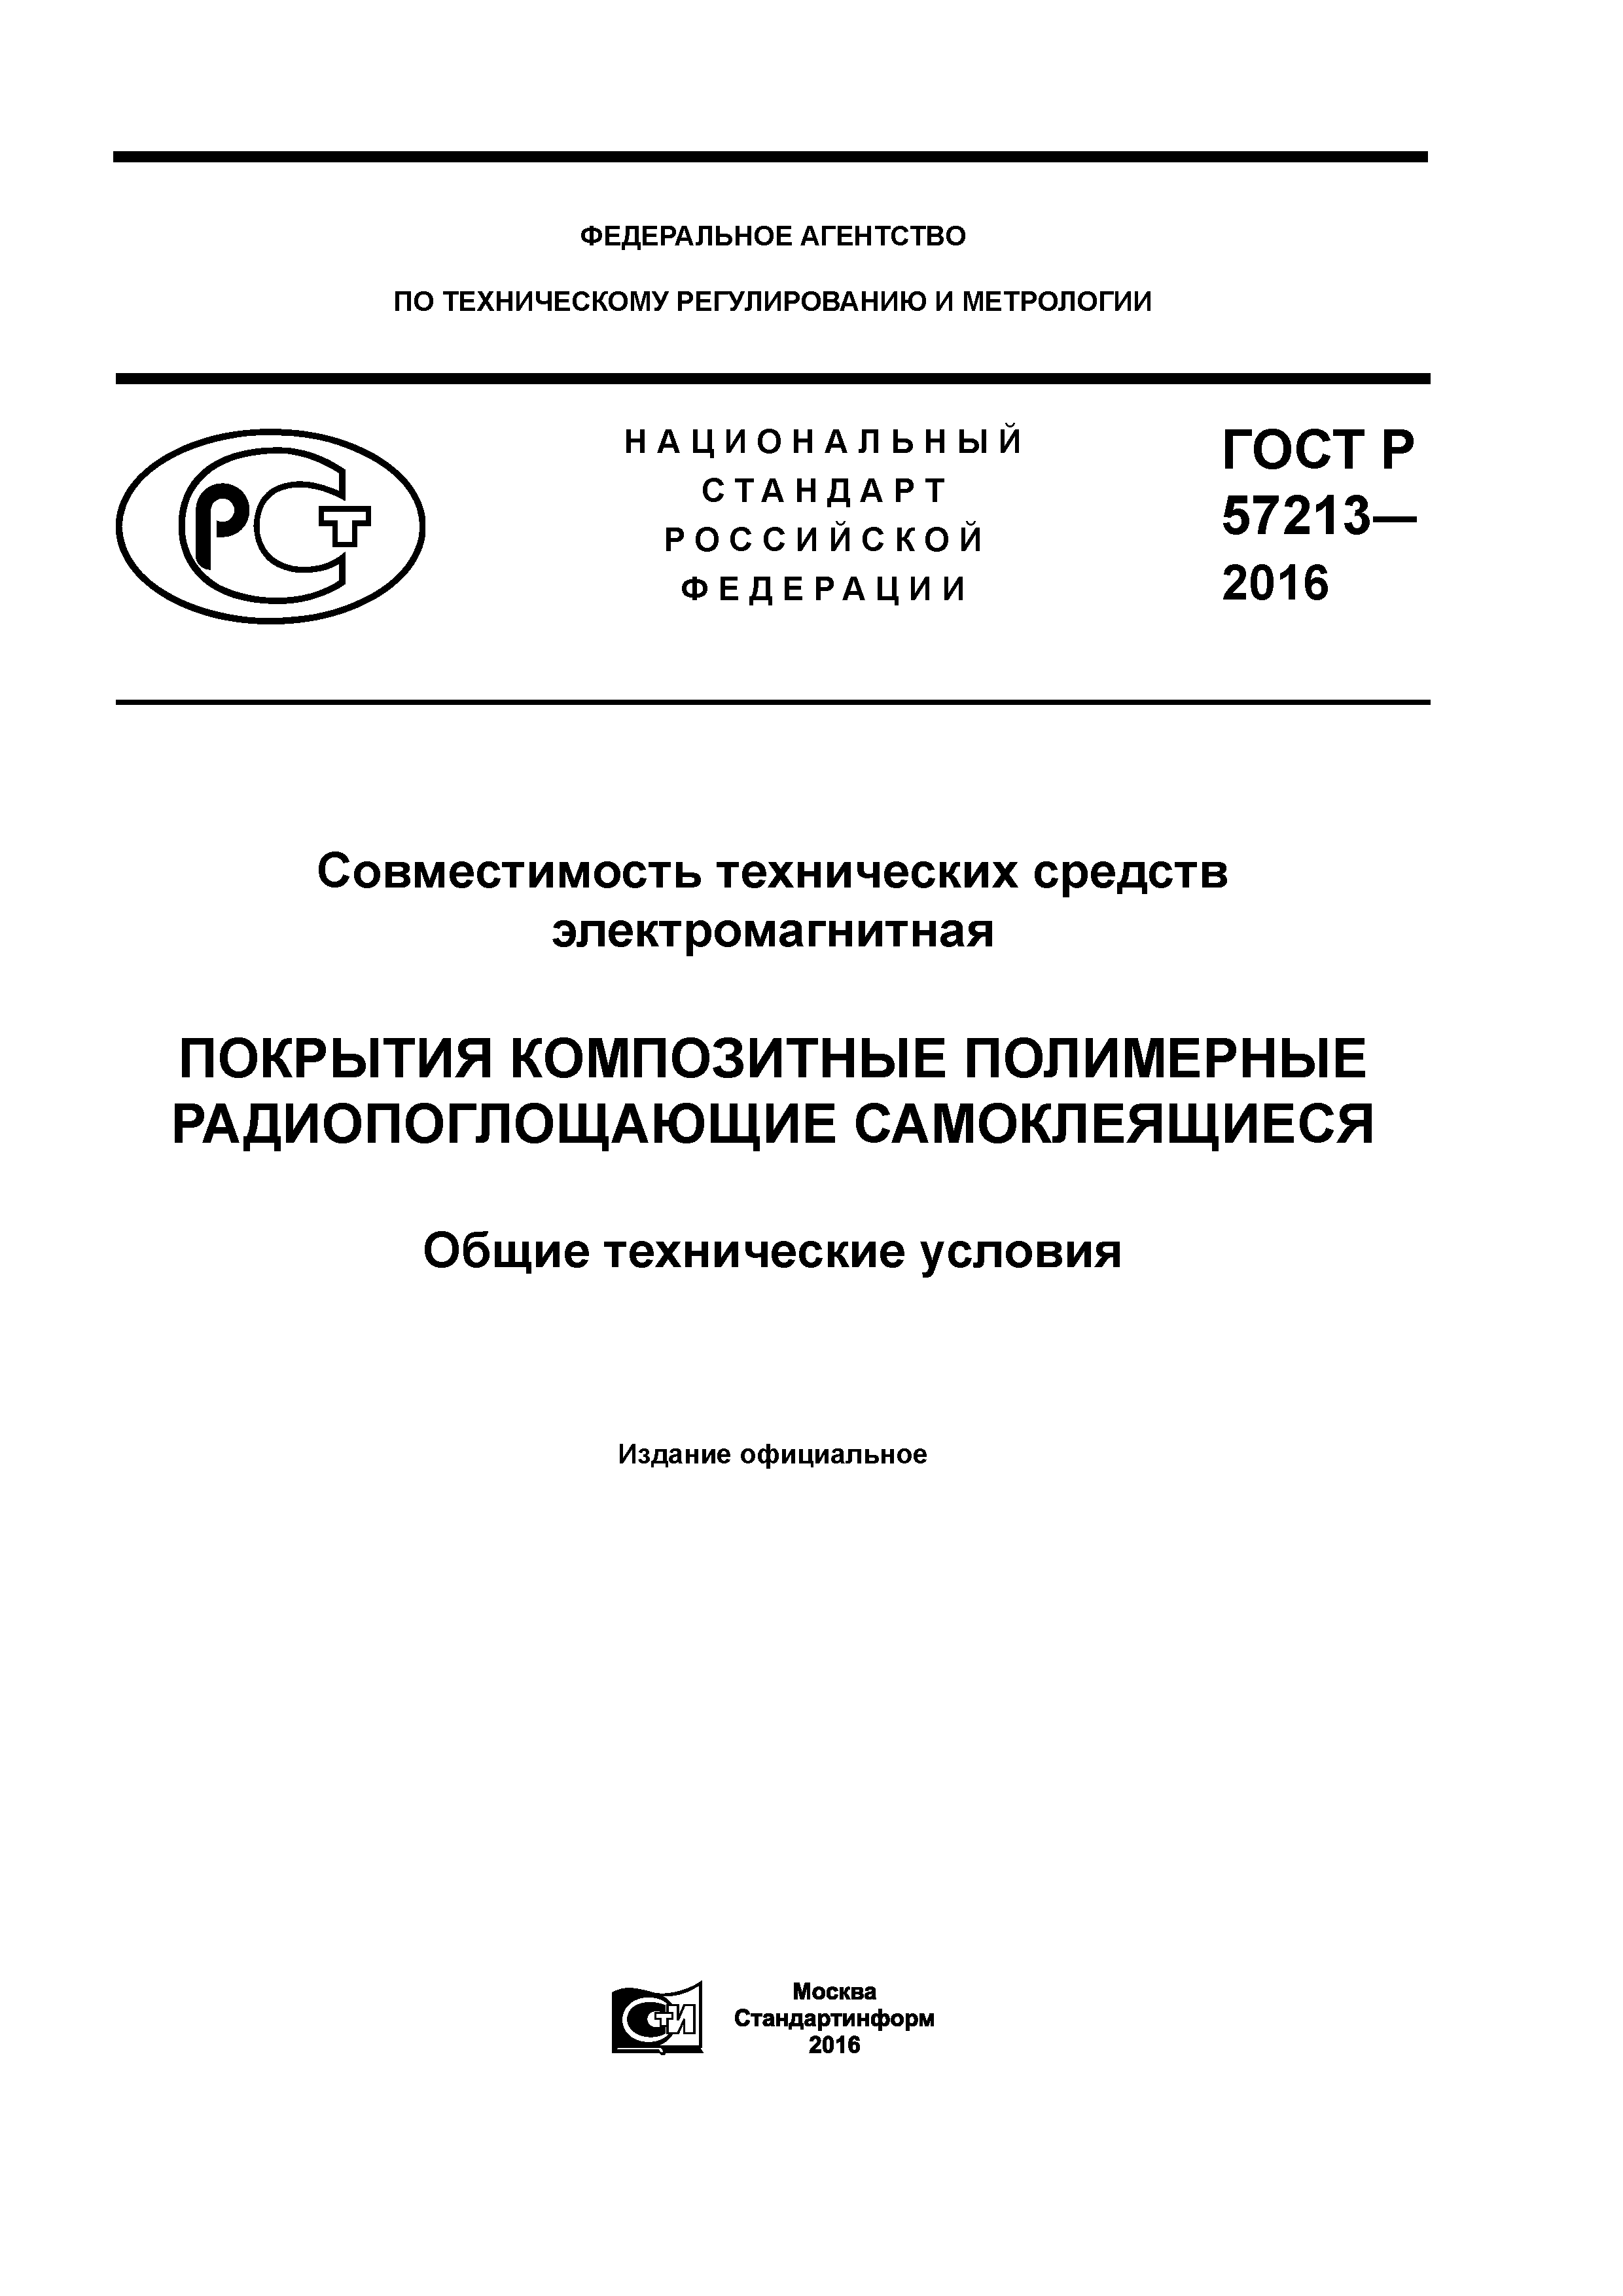 ГОСТ Р 57213-2016